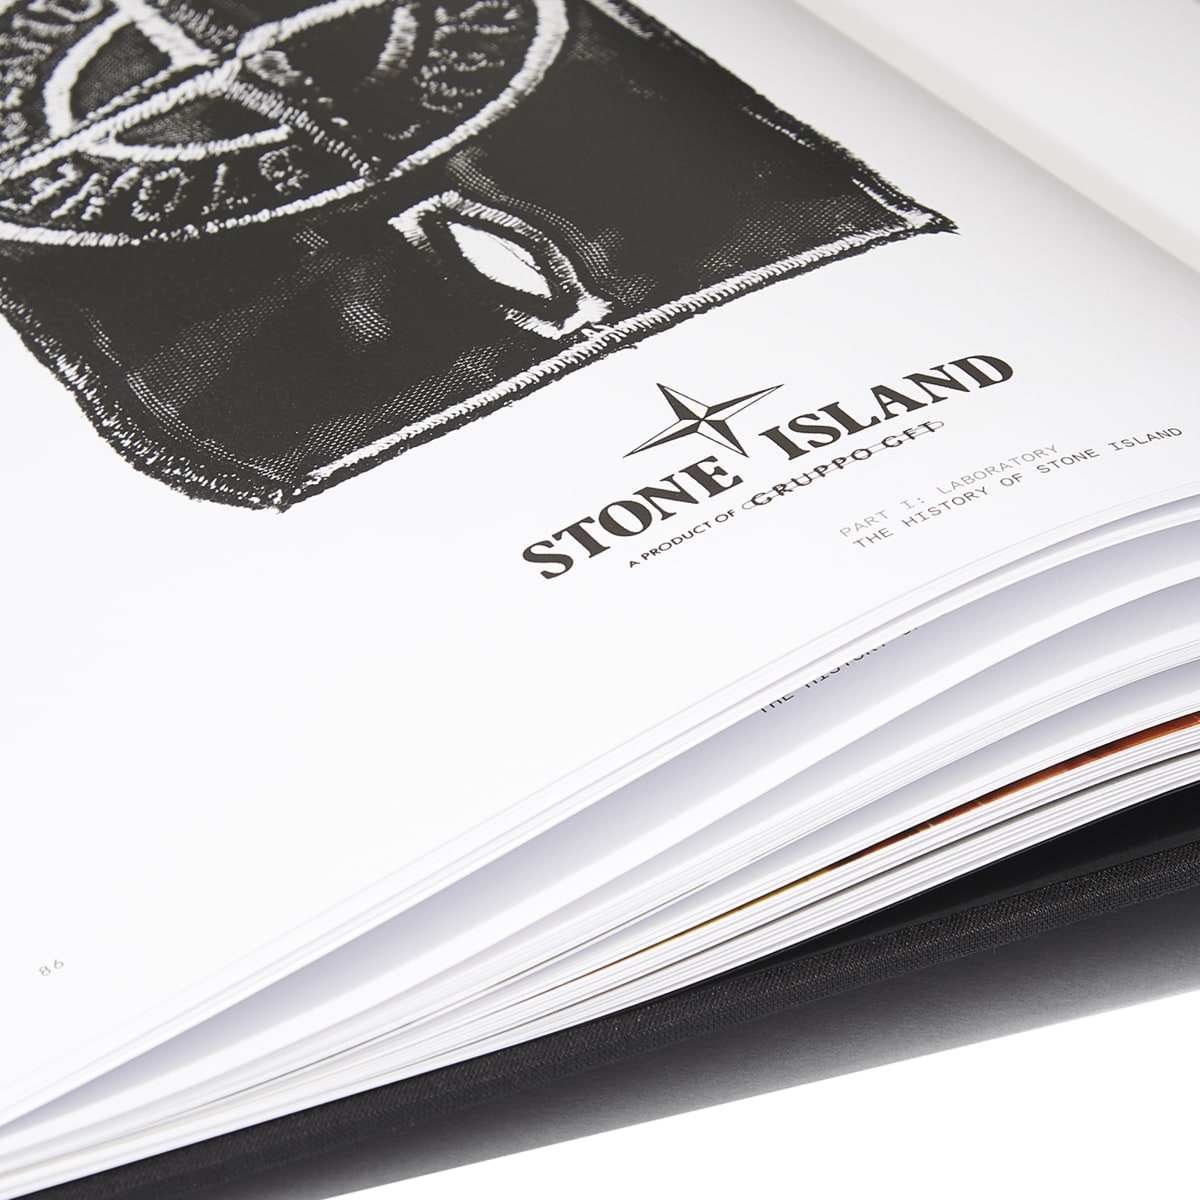 Stone Island Carlo Rivetti Interview on Brand History and Rizzoli Book